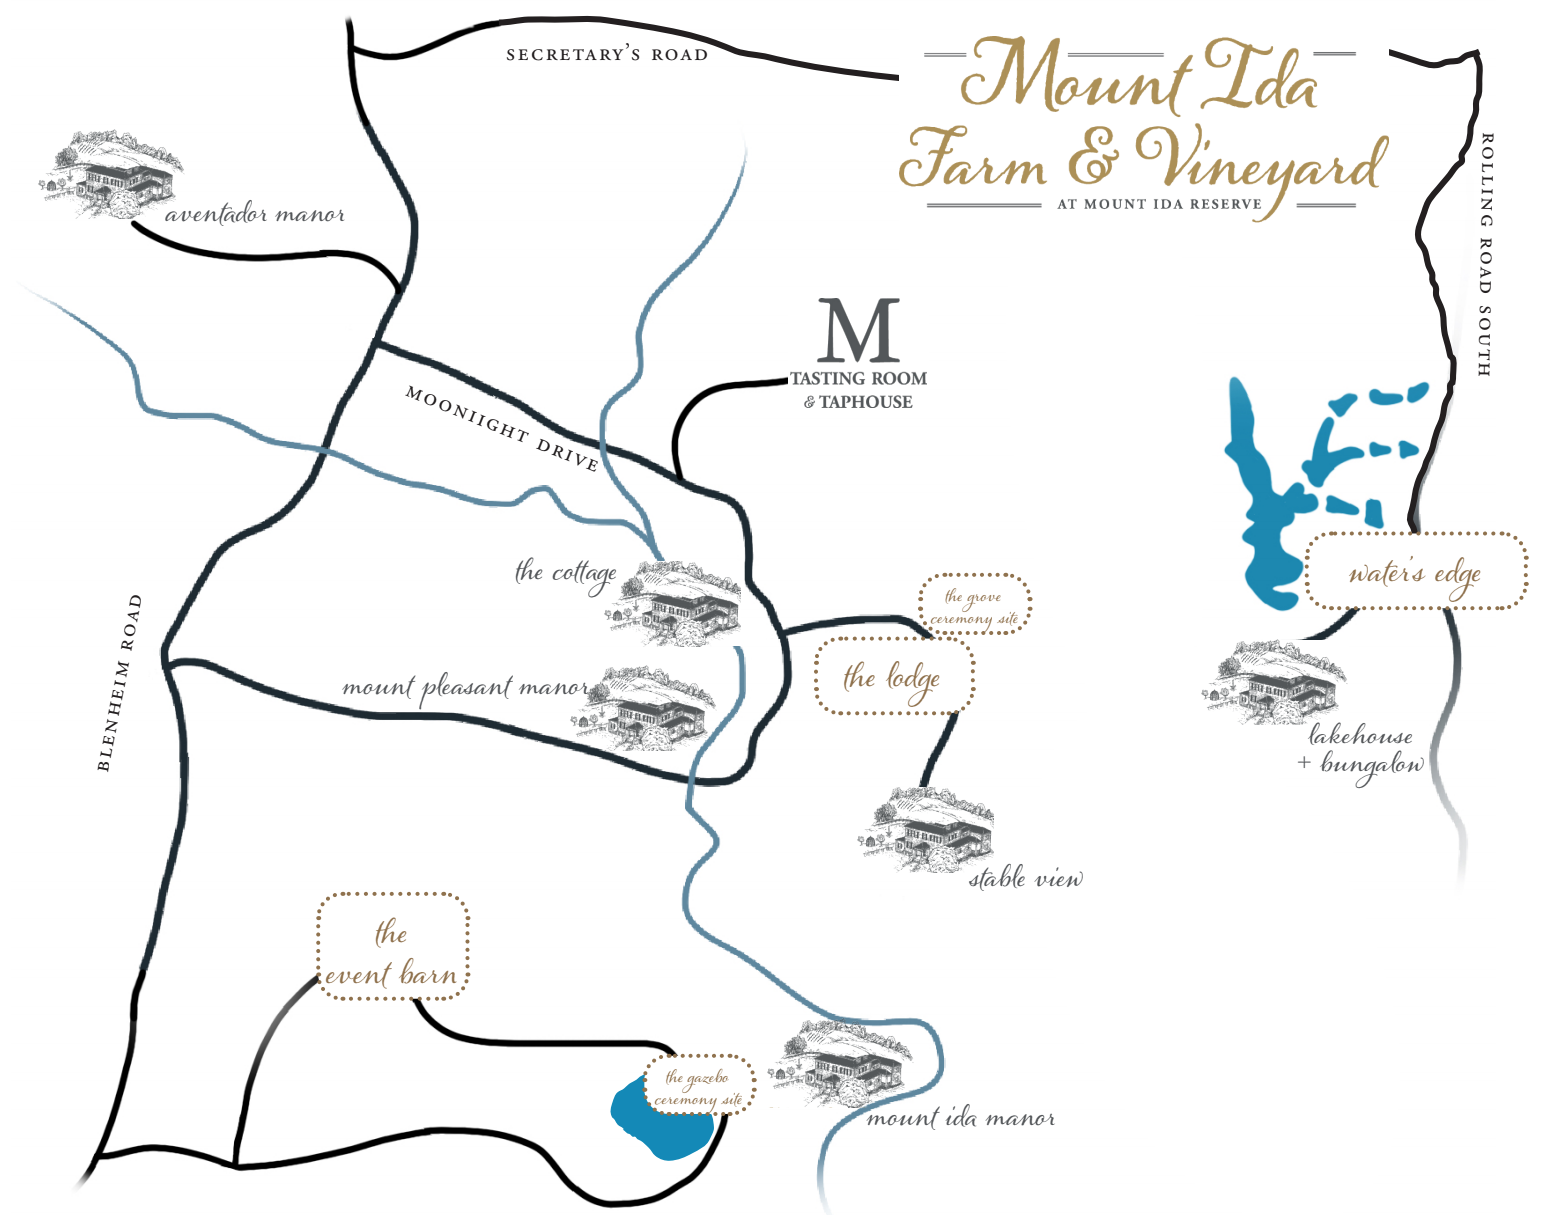 Mount Ida Farm & Vineyard Map